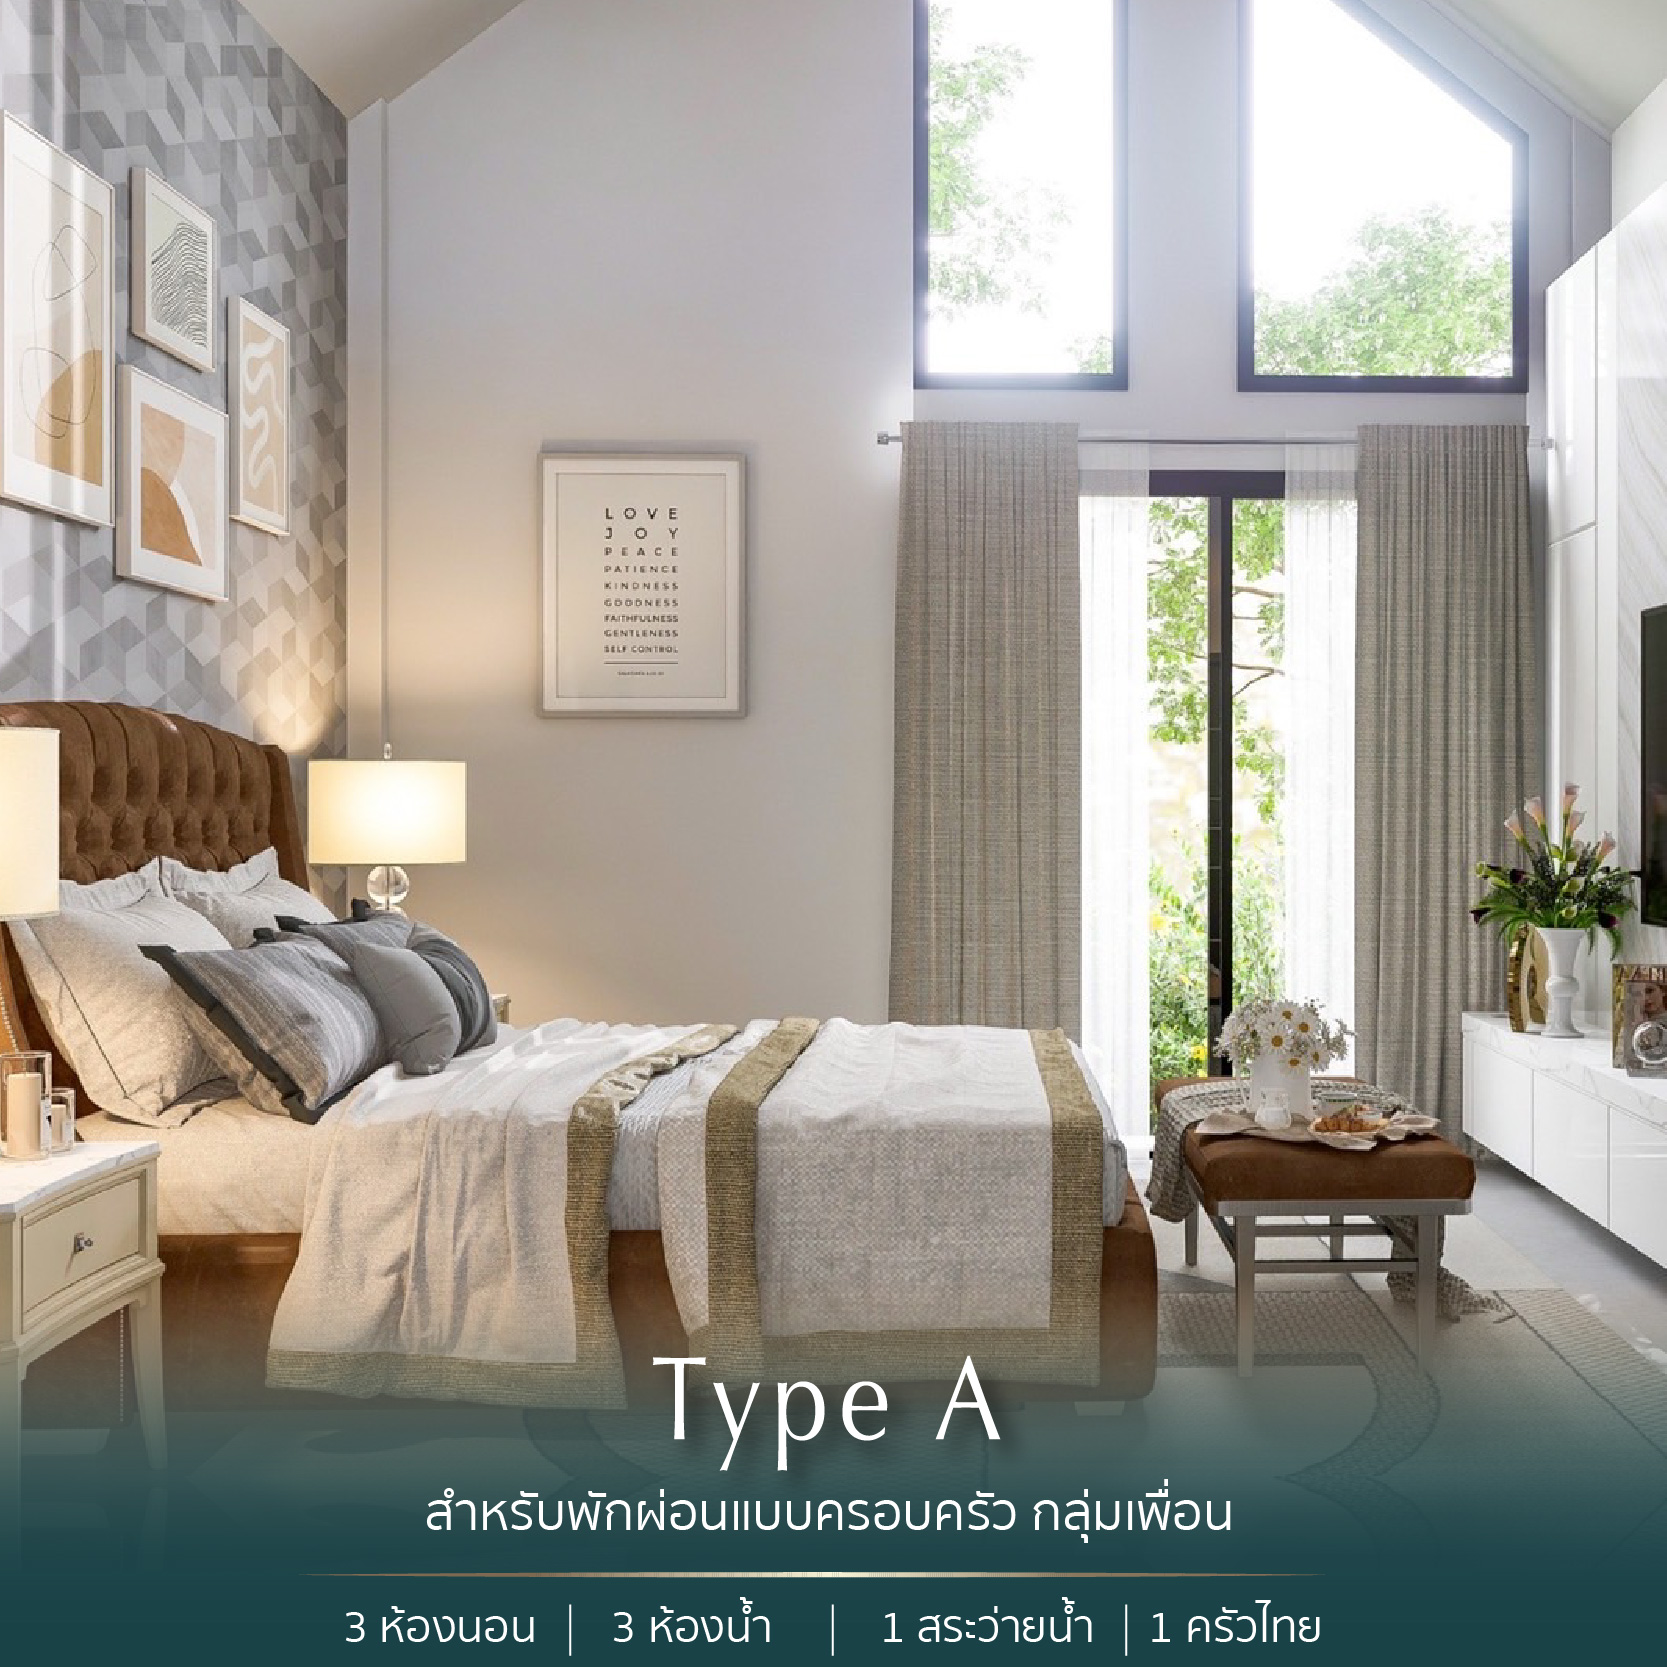 B Sea Pool Villa Bangsaen. 3 bedrooms Pool Villa for investment!!️ Starting price 5.9m baht